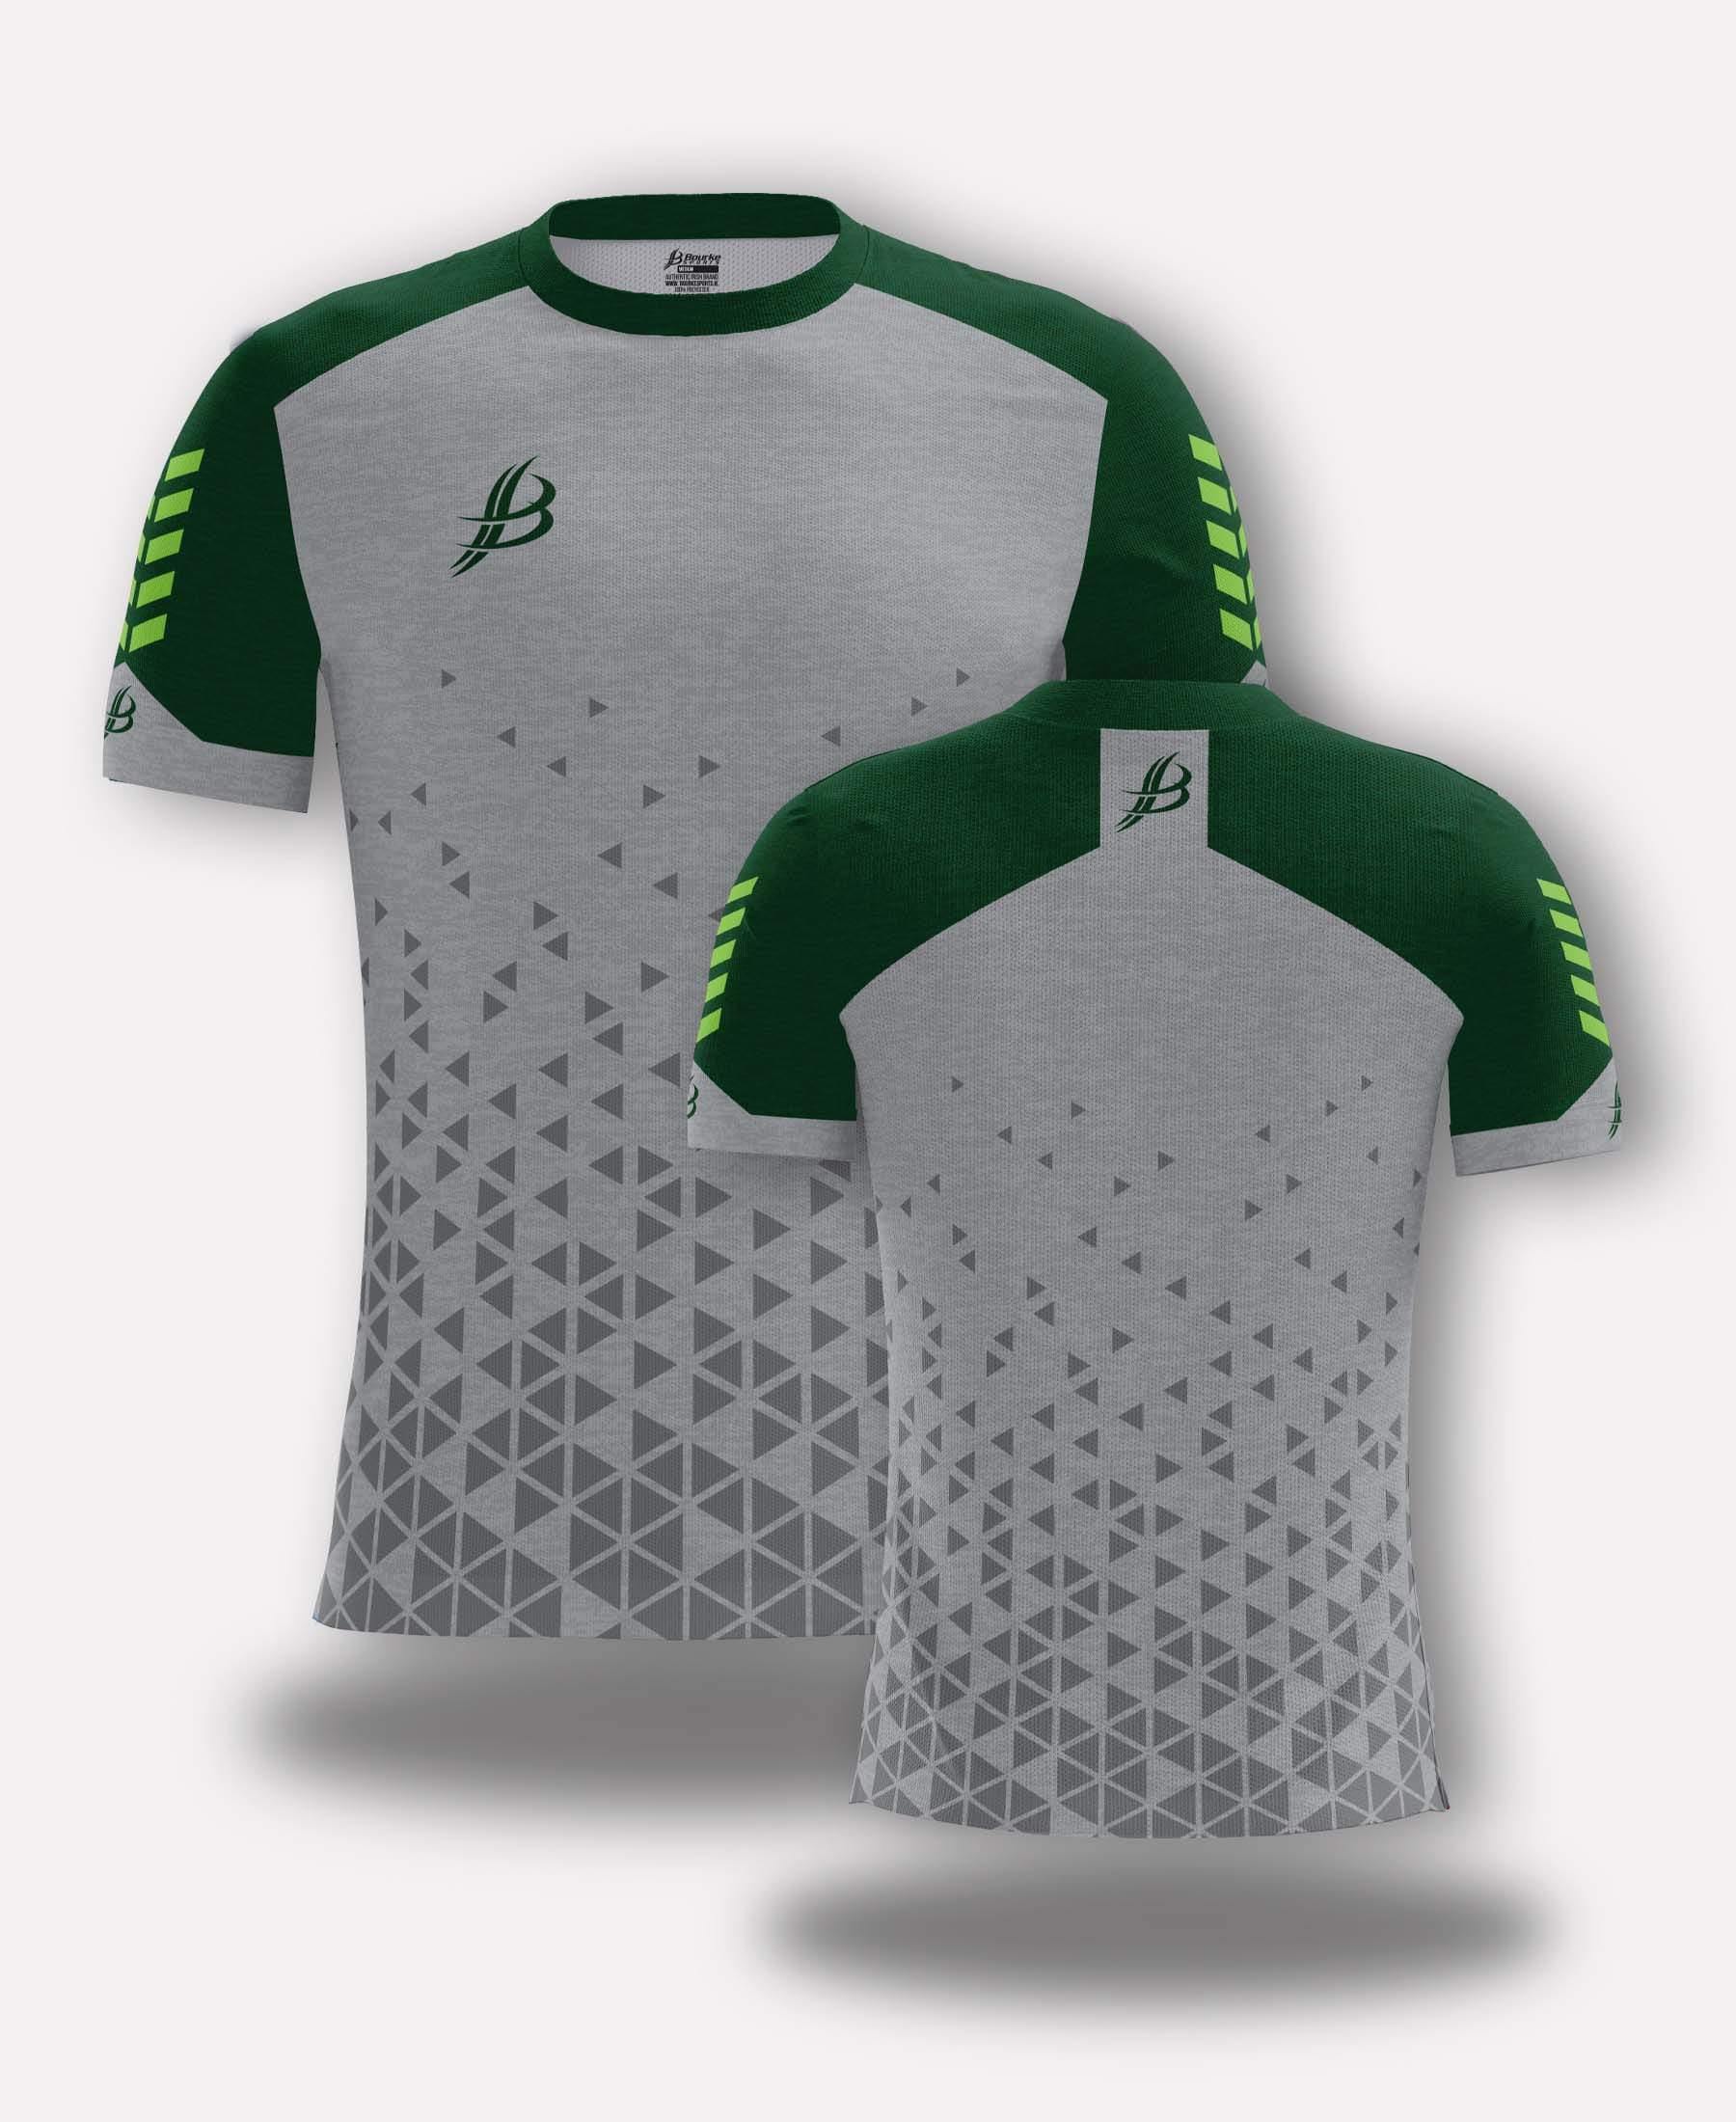 Bua20 Kids Jersey Grey/Aussie Green/Lime Green - Bourke Sports Limited